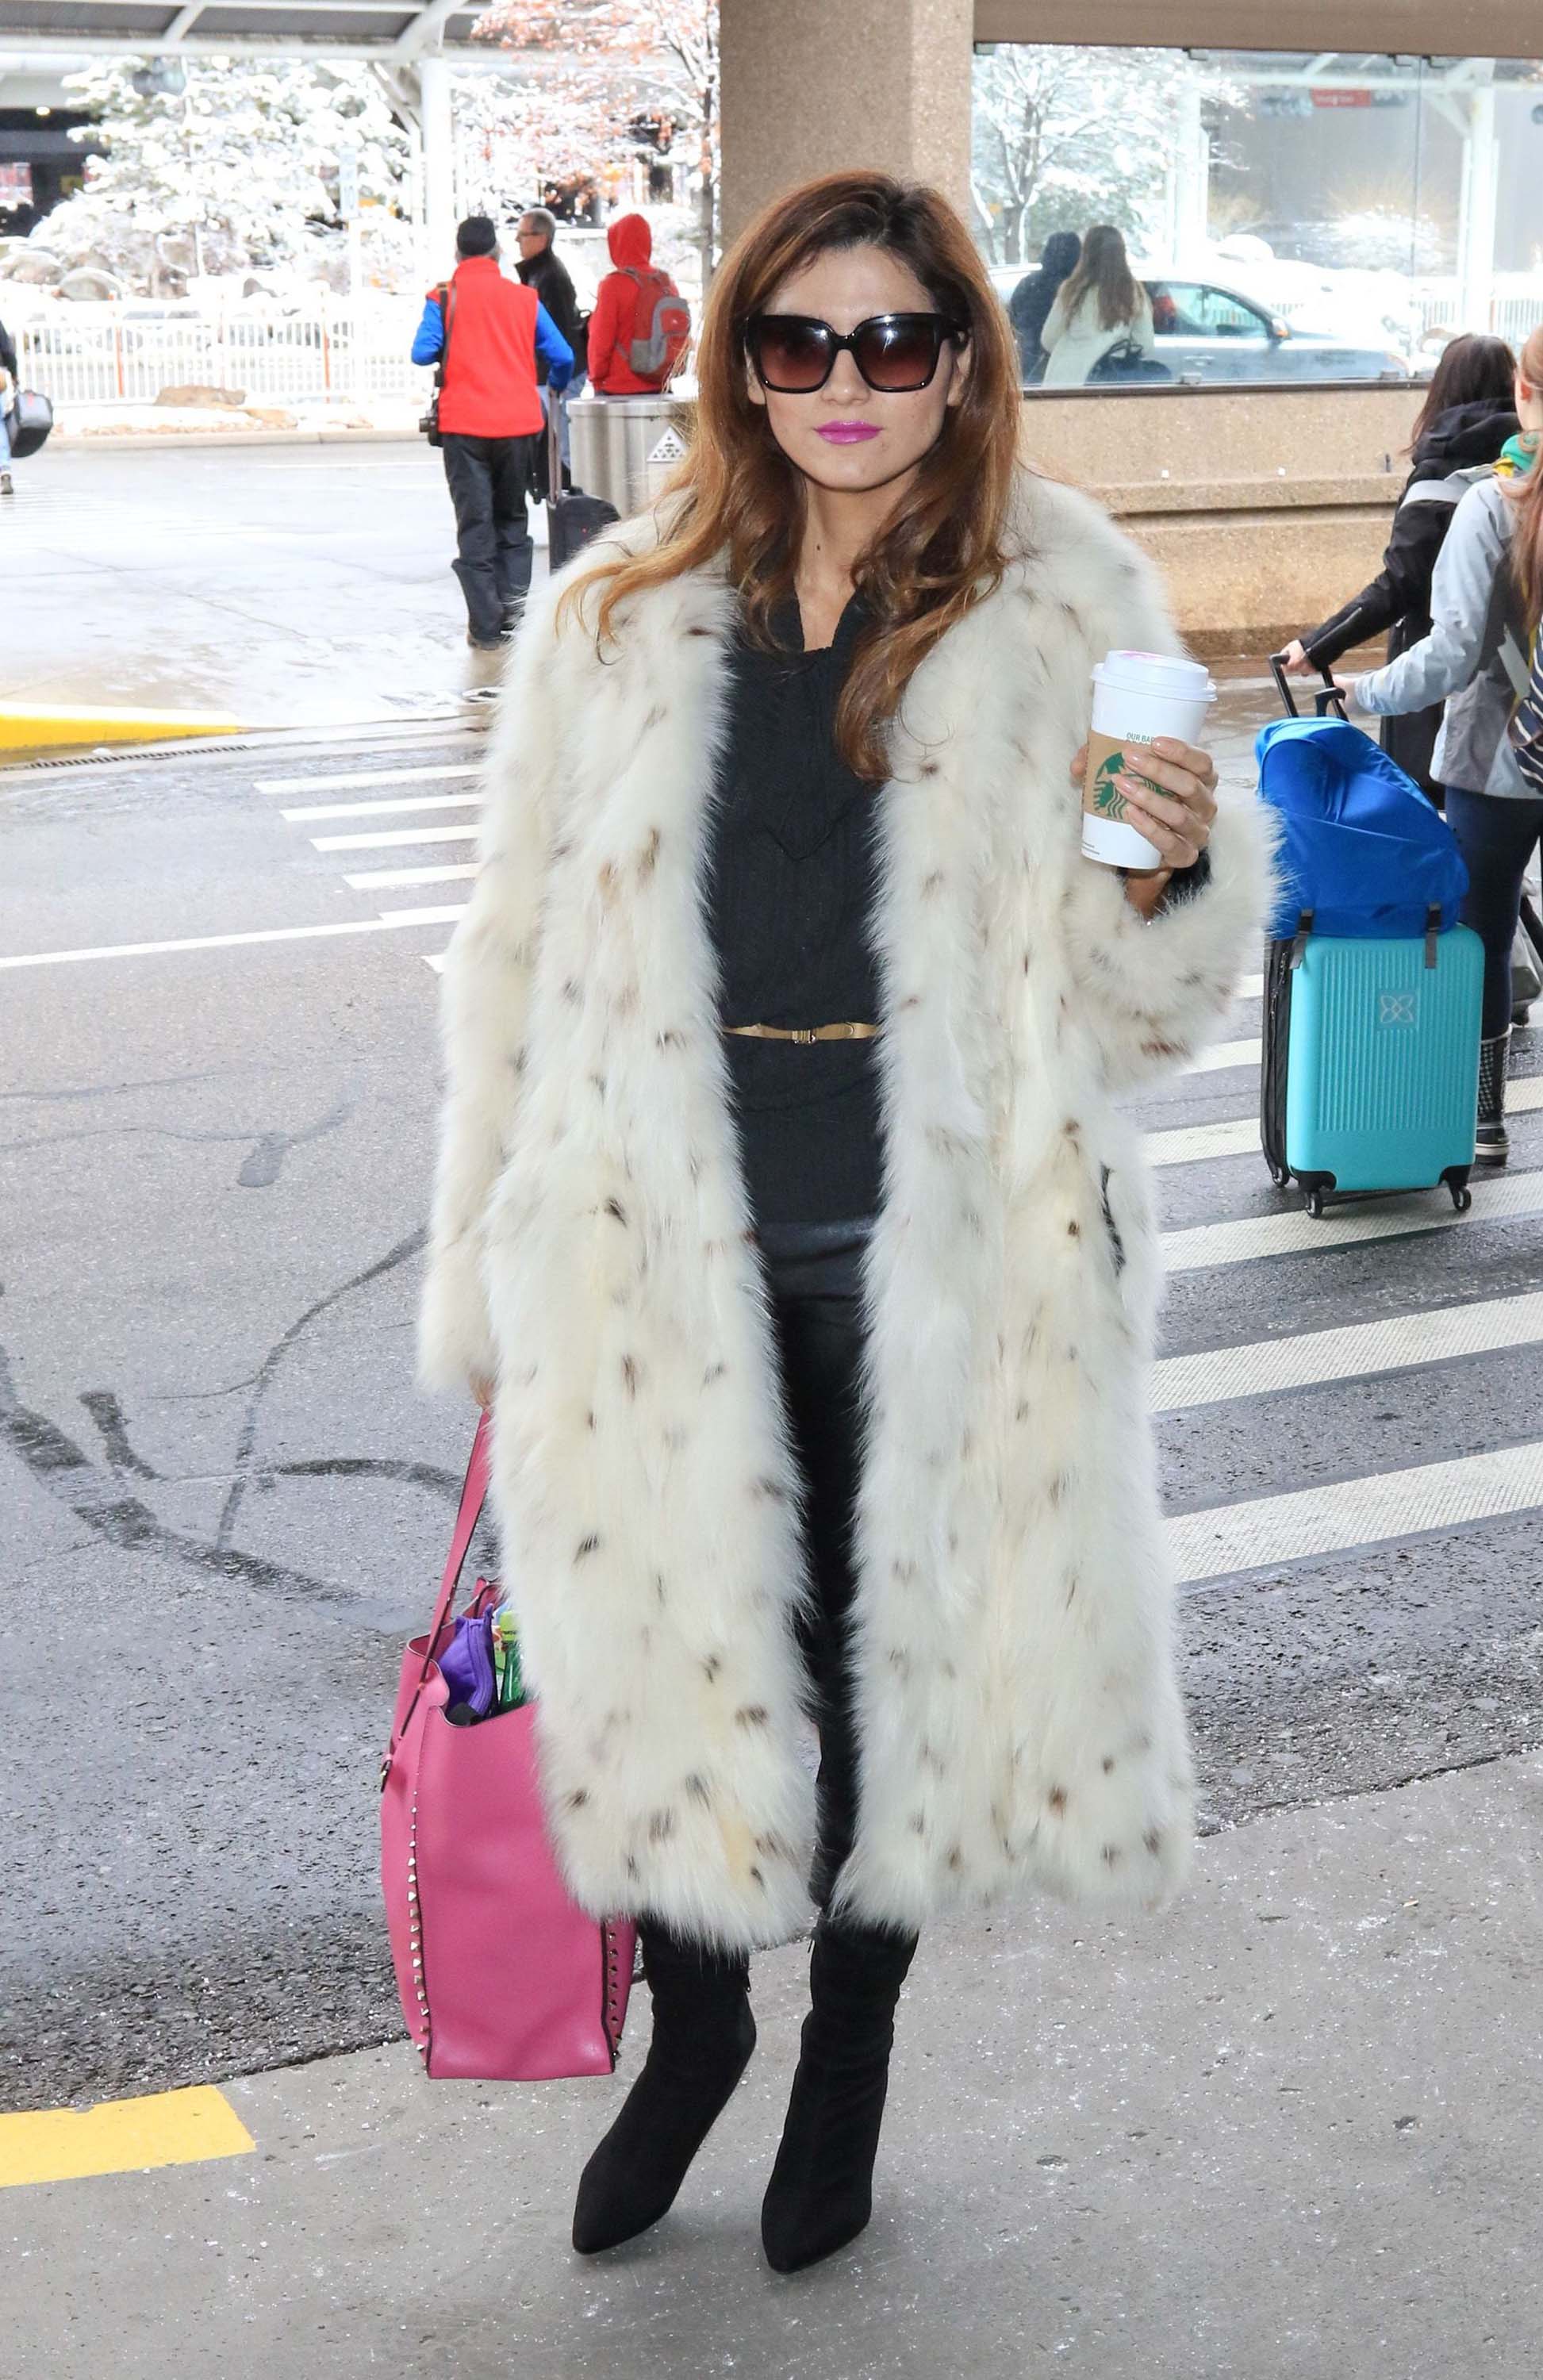 Blanca Blanco attends Sundance Film Festival